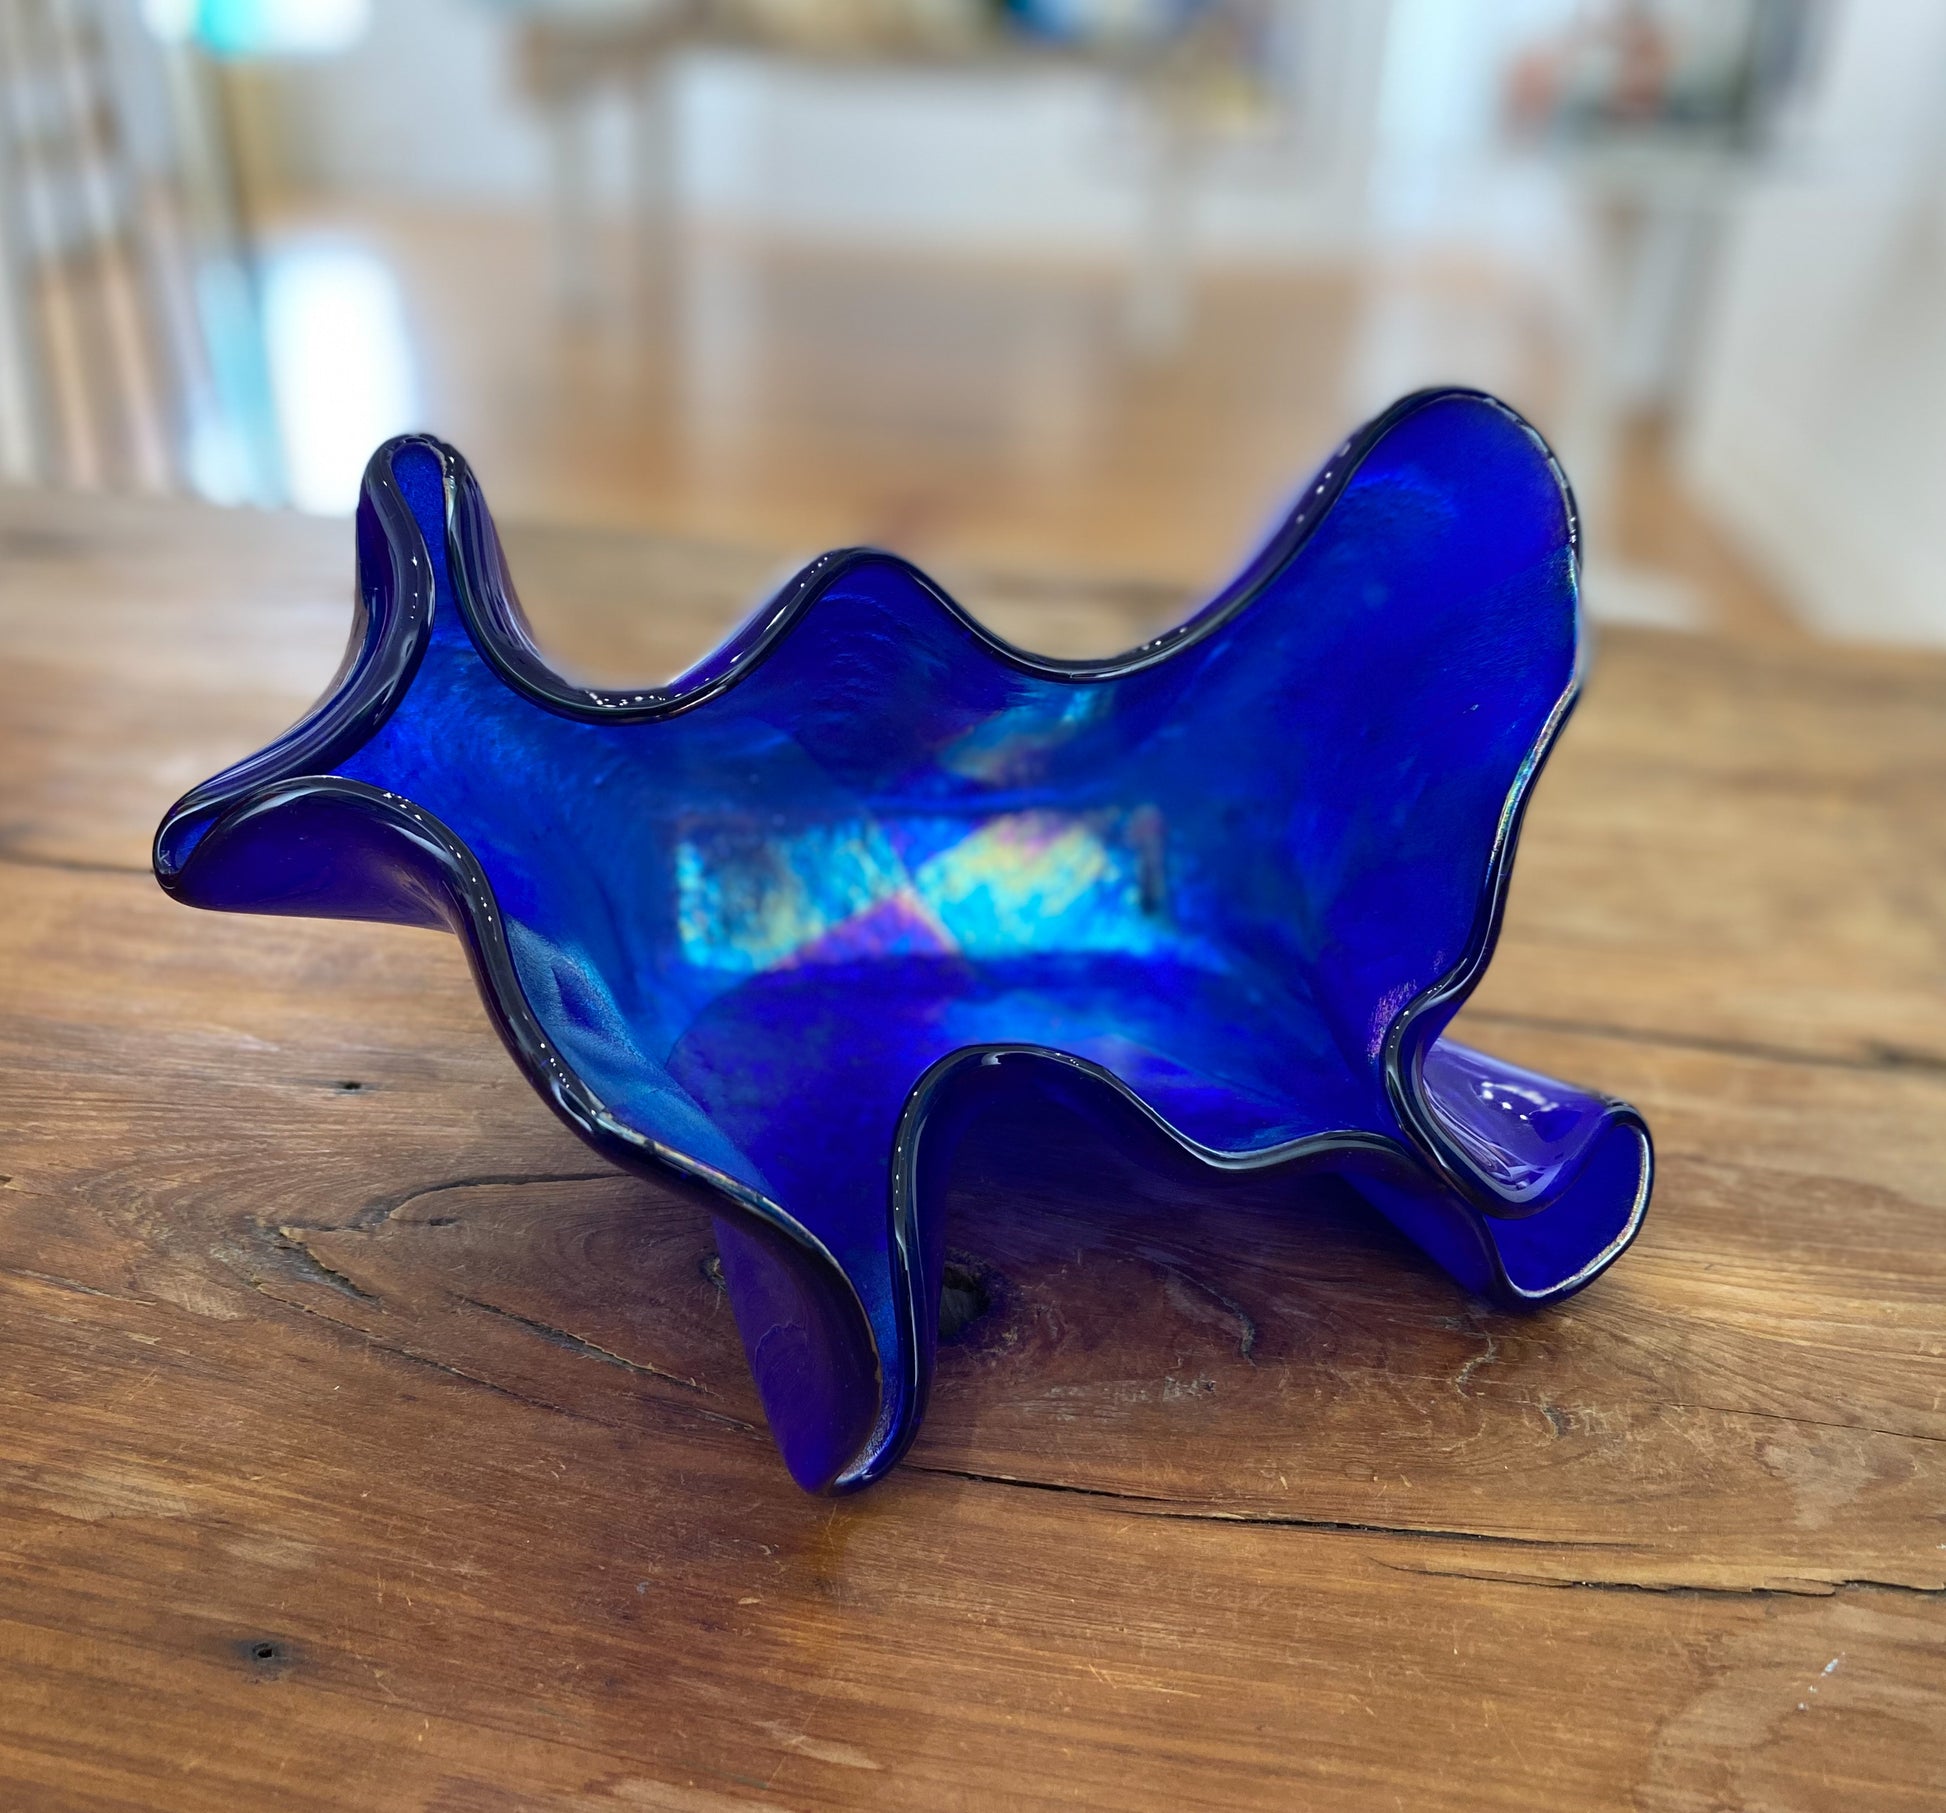 Biloxi Blues Sculptural Shell